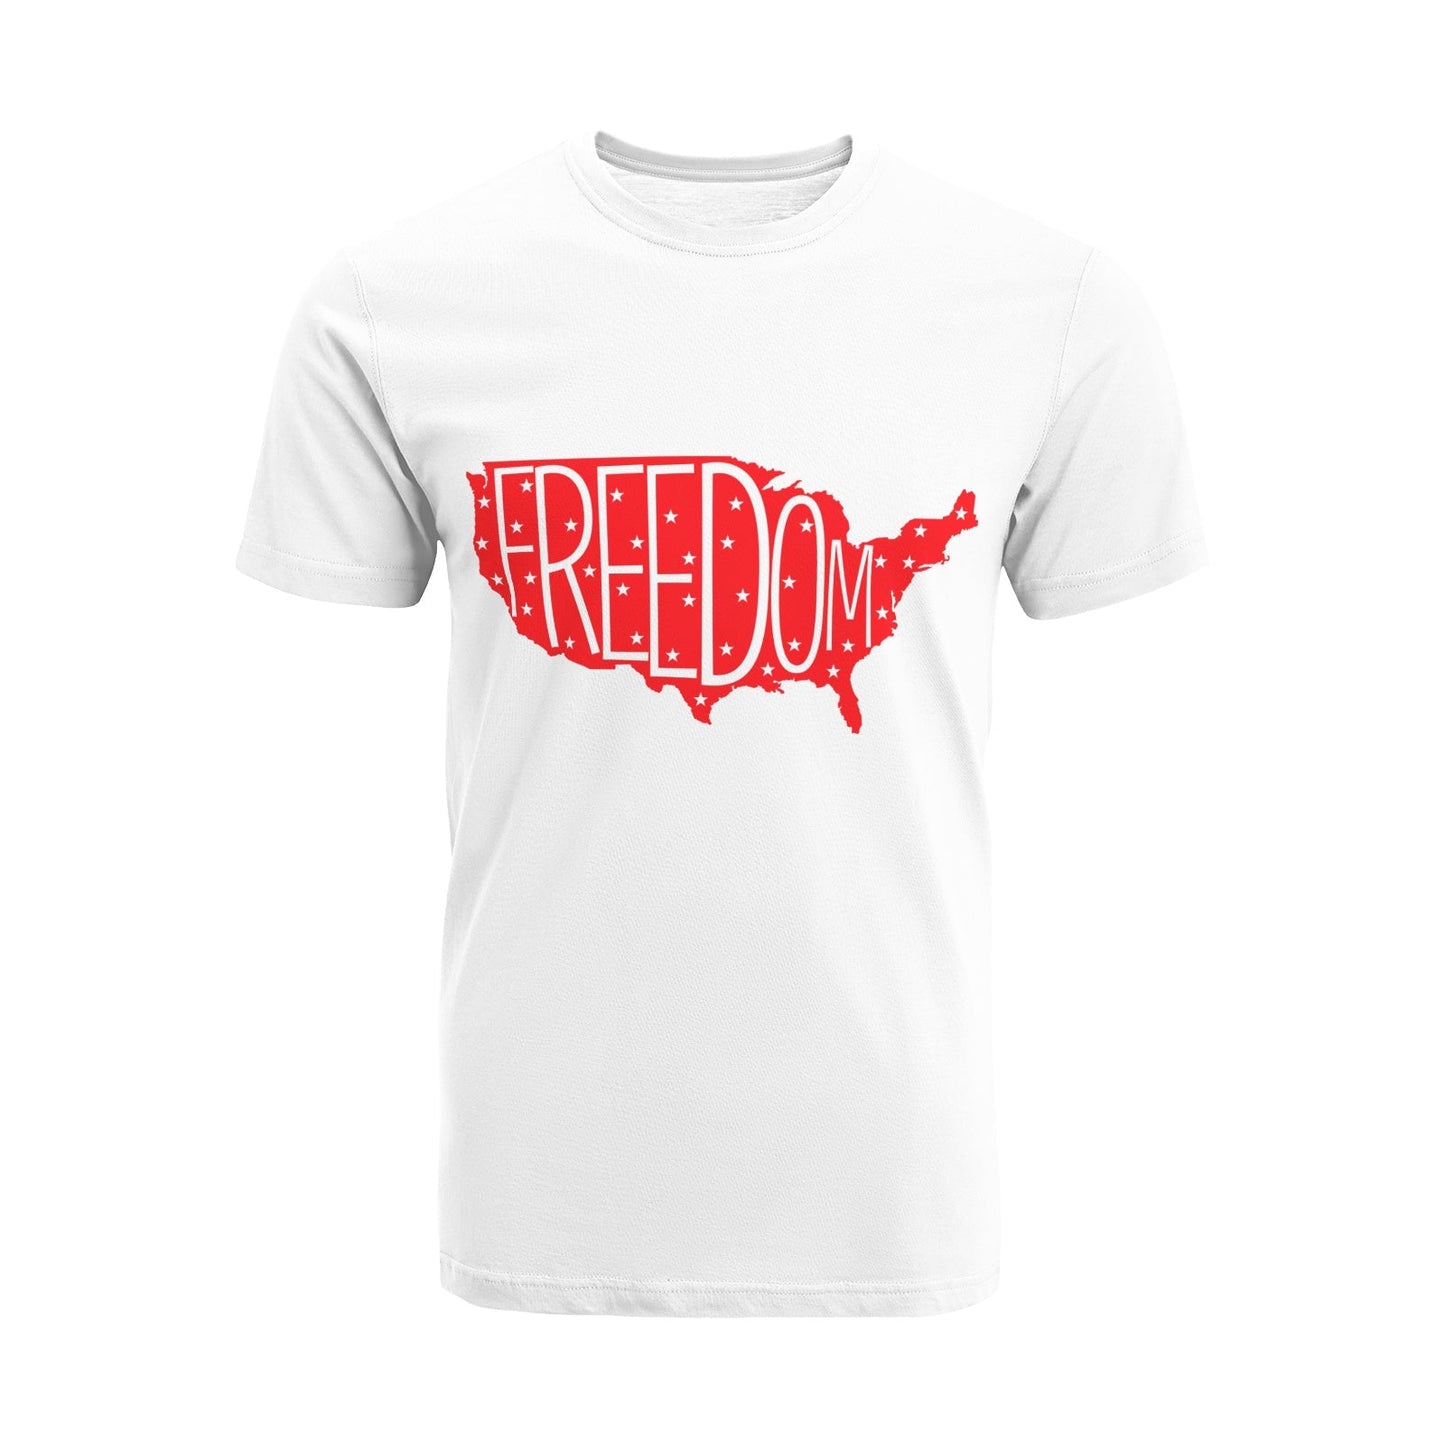 Unisex Short Sleeve Crew Neck Cotton Jersey T-Shirt USA 19